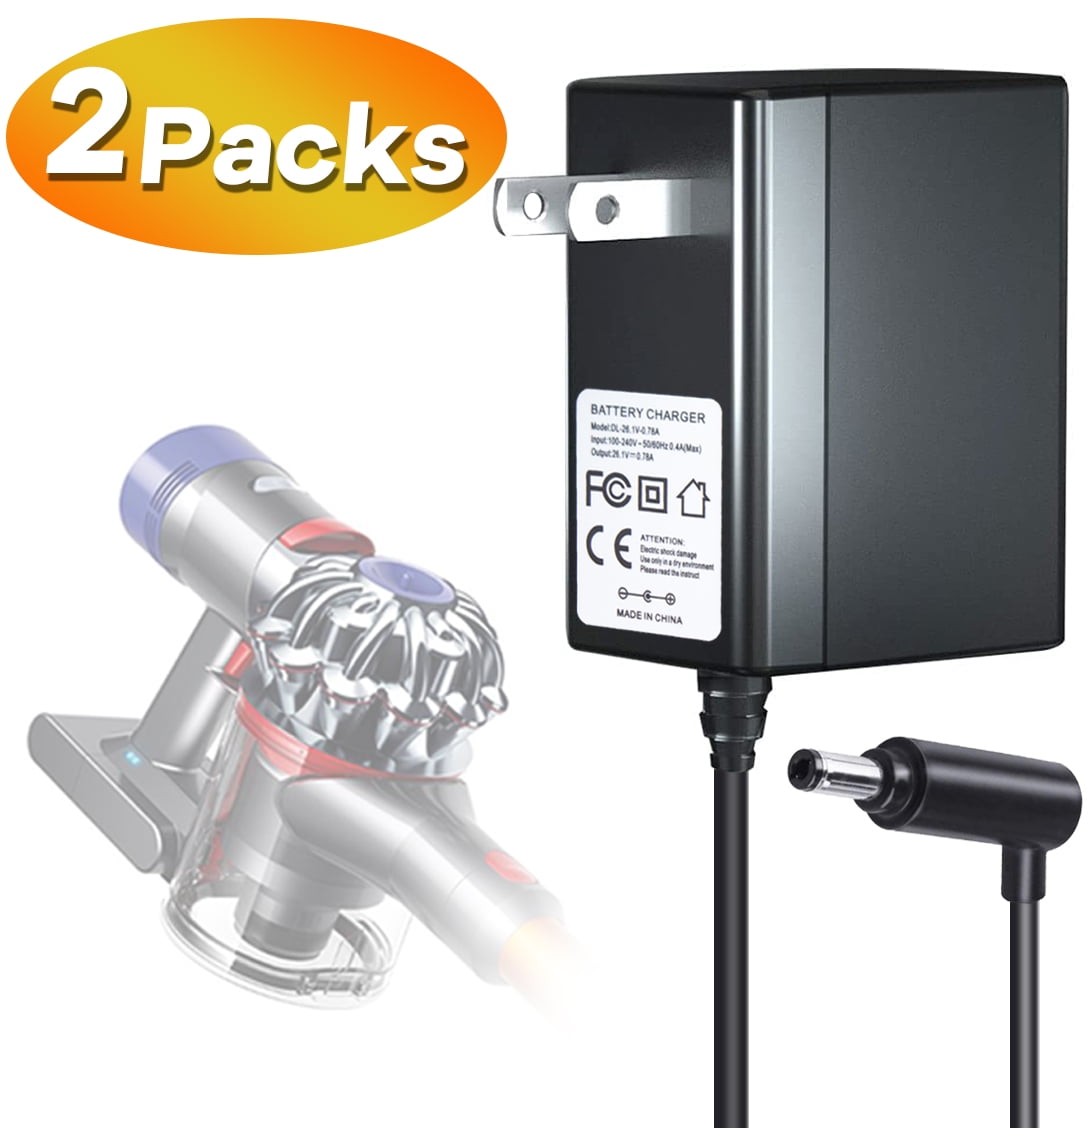 Battery Charger Power Cable Plug for Dyson V6 V7 V8 Vacuum Cleaner UK STOCK  5053197079712